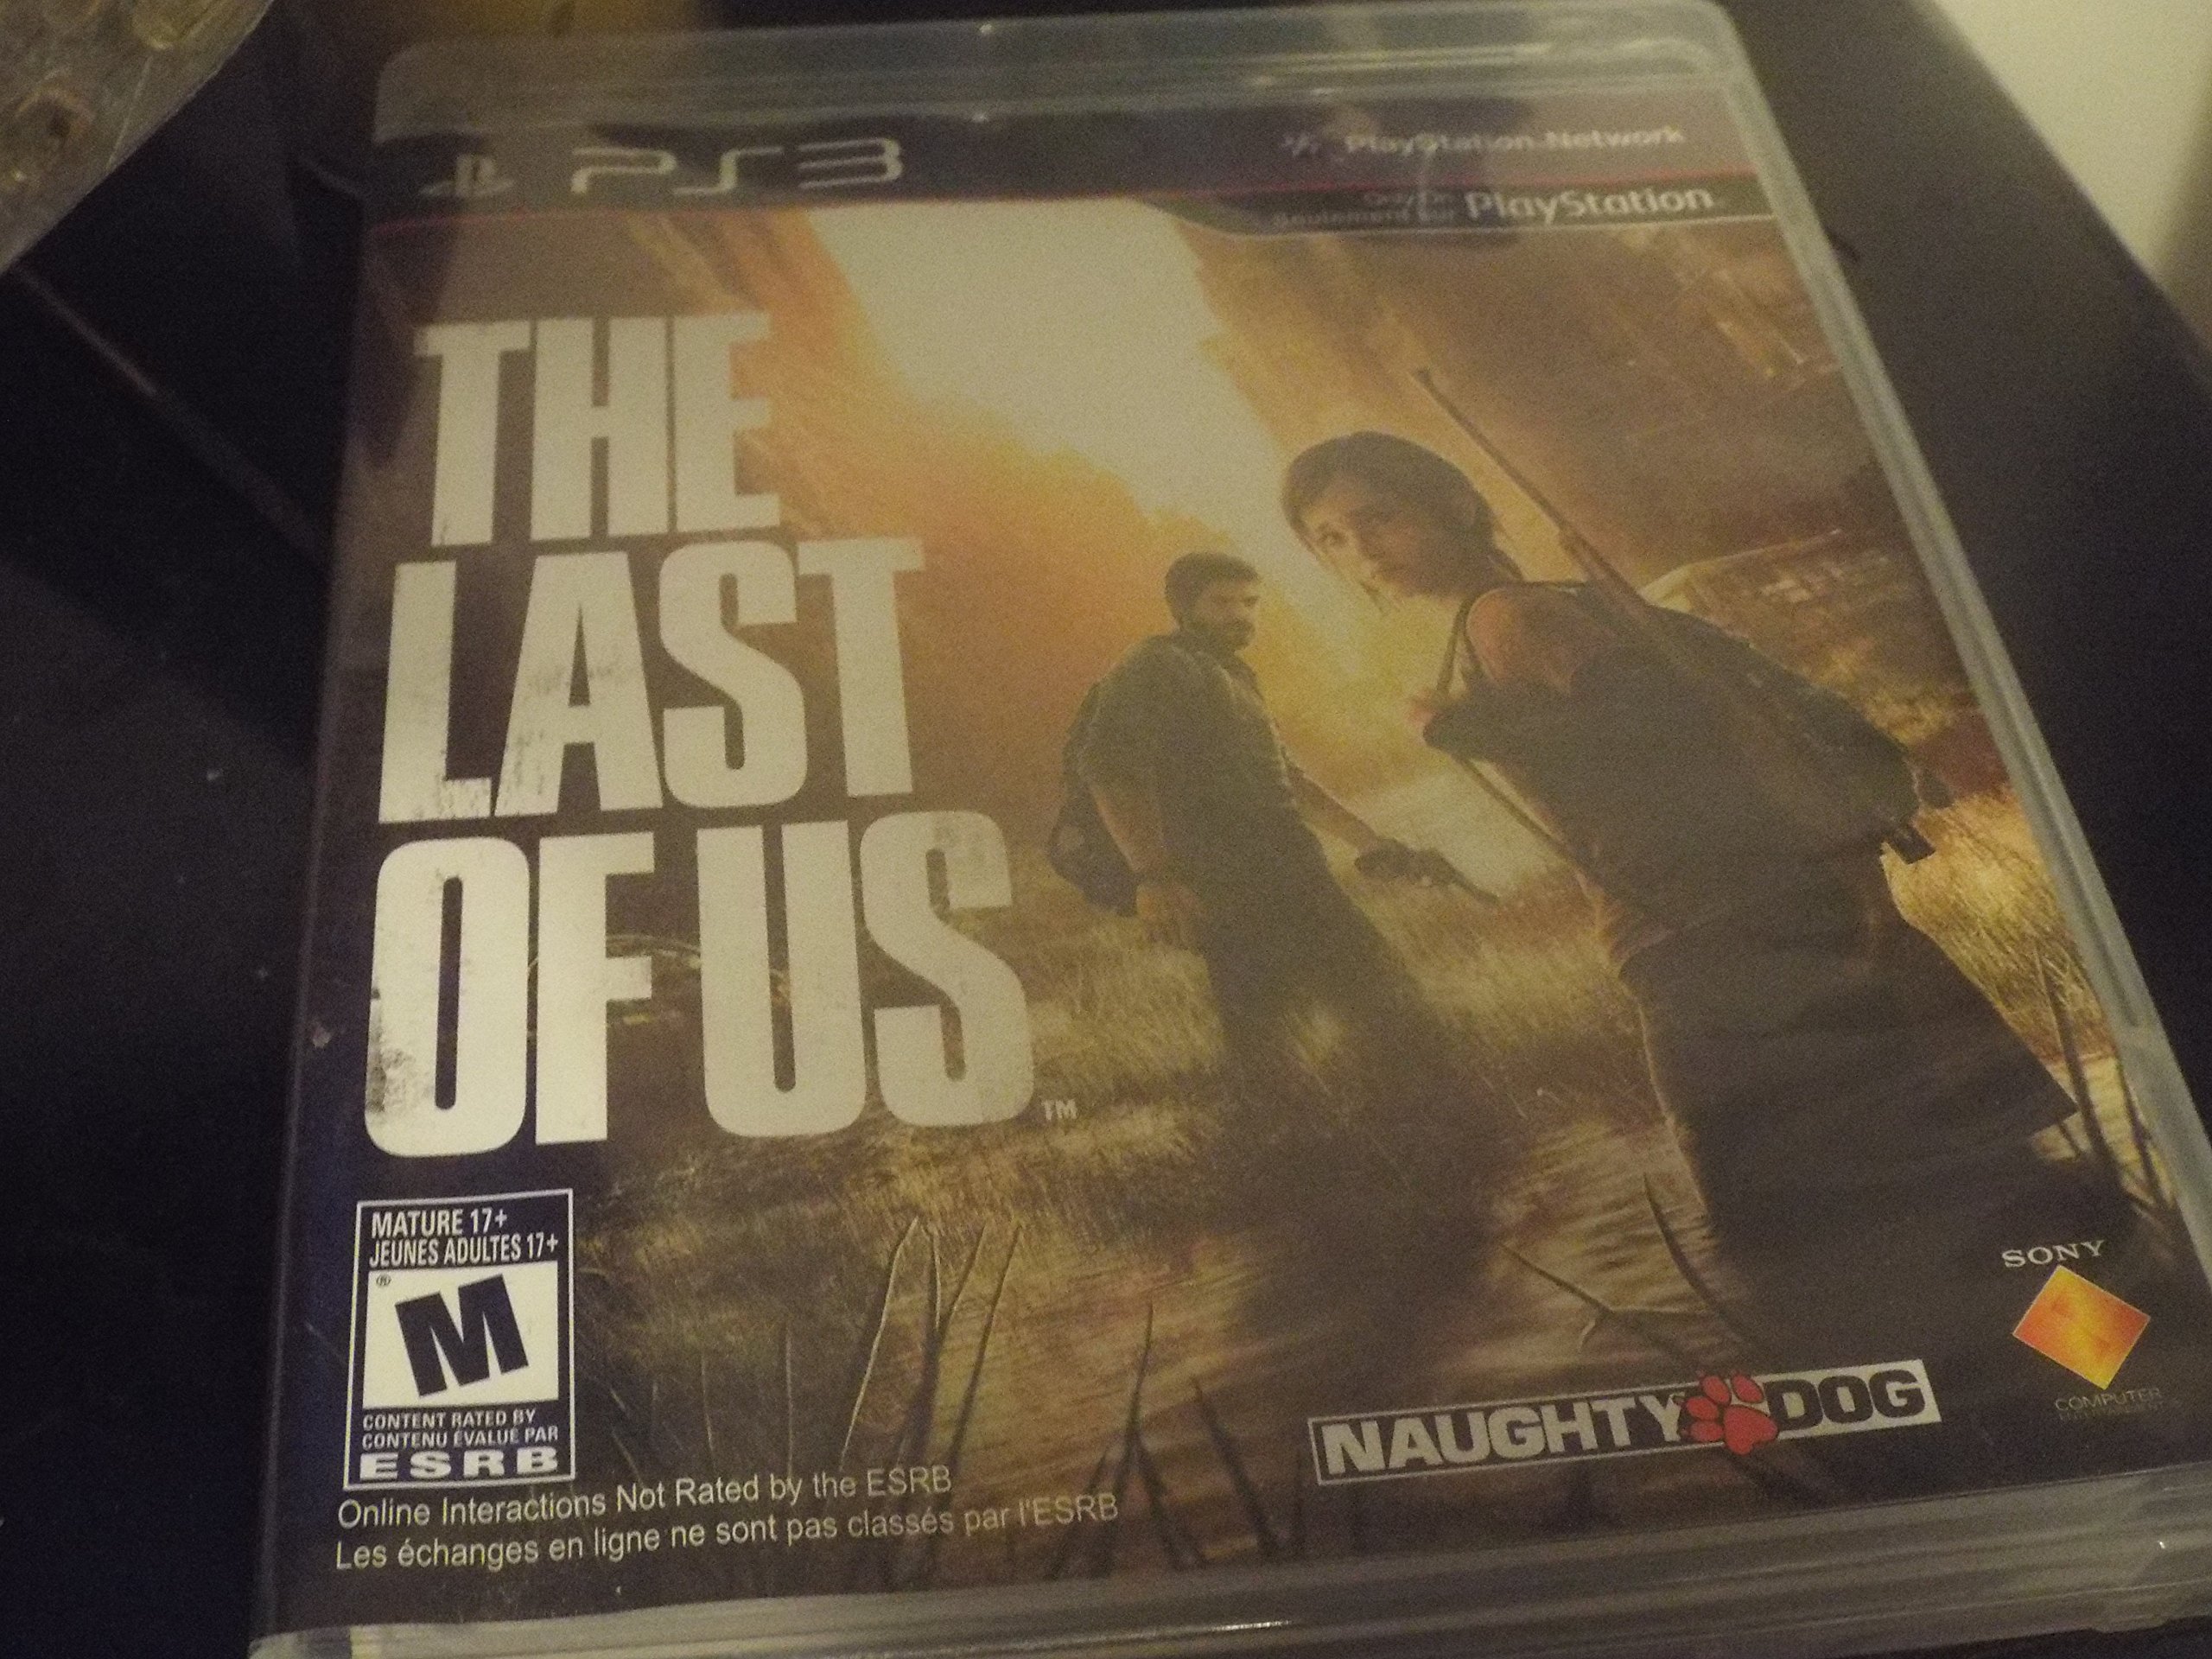 PS3 250GB The Last of Us Bundle